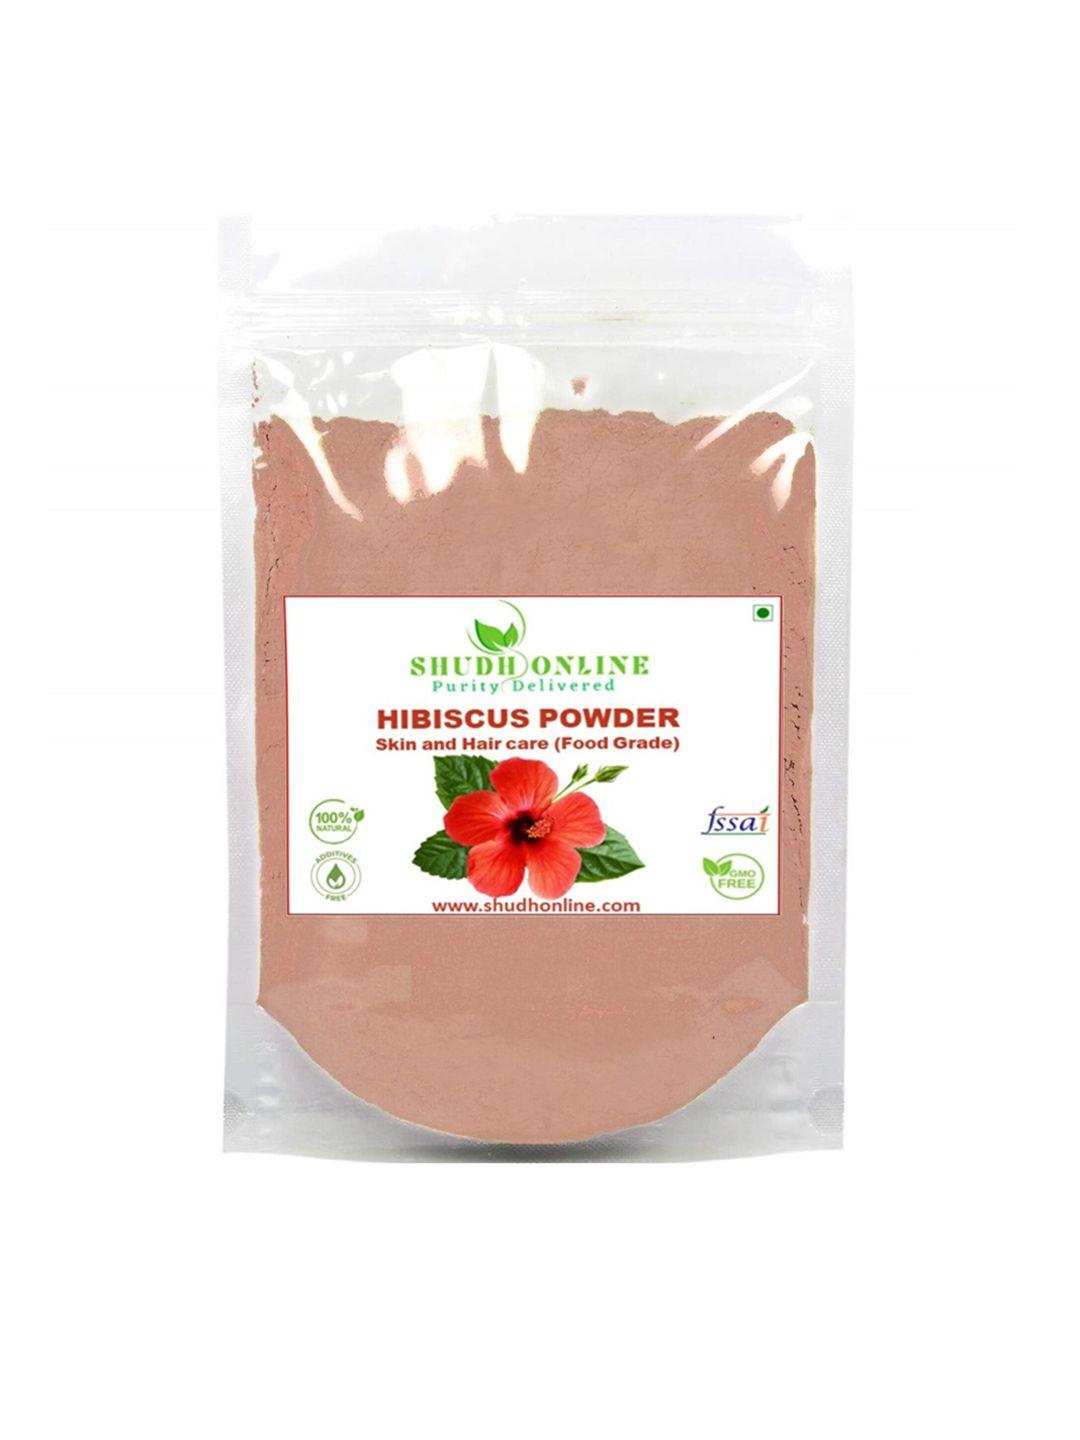 Shudh Online 100% Natural Hibiscus Powder For Skin & Hair Care - 1Kg